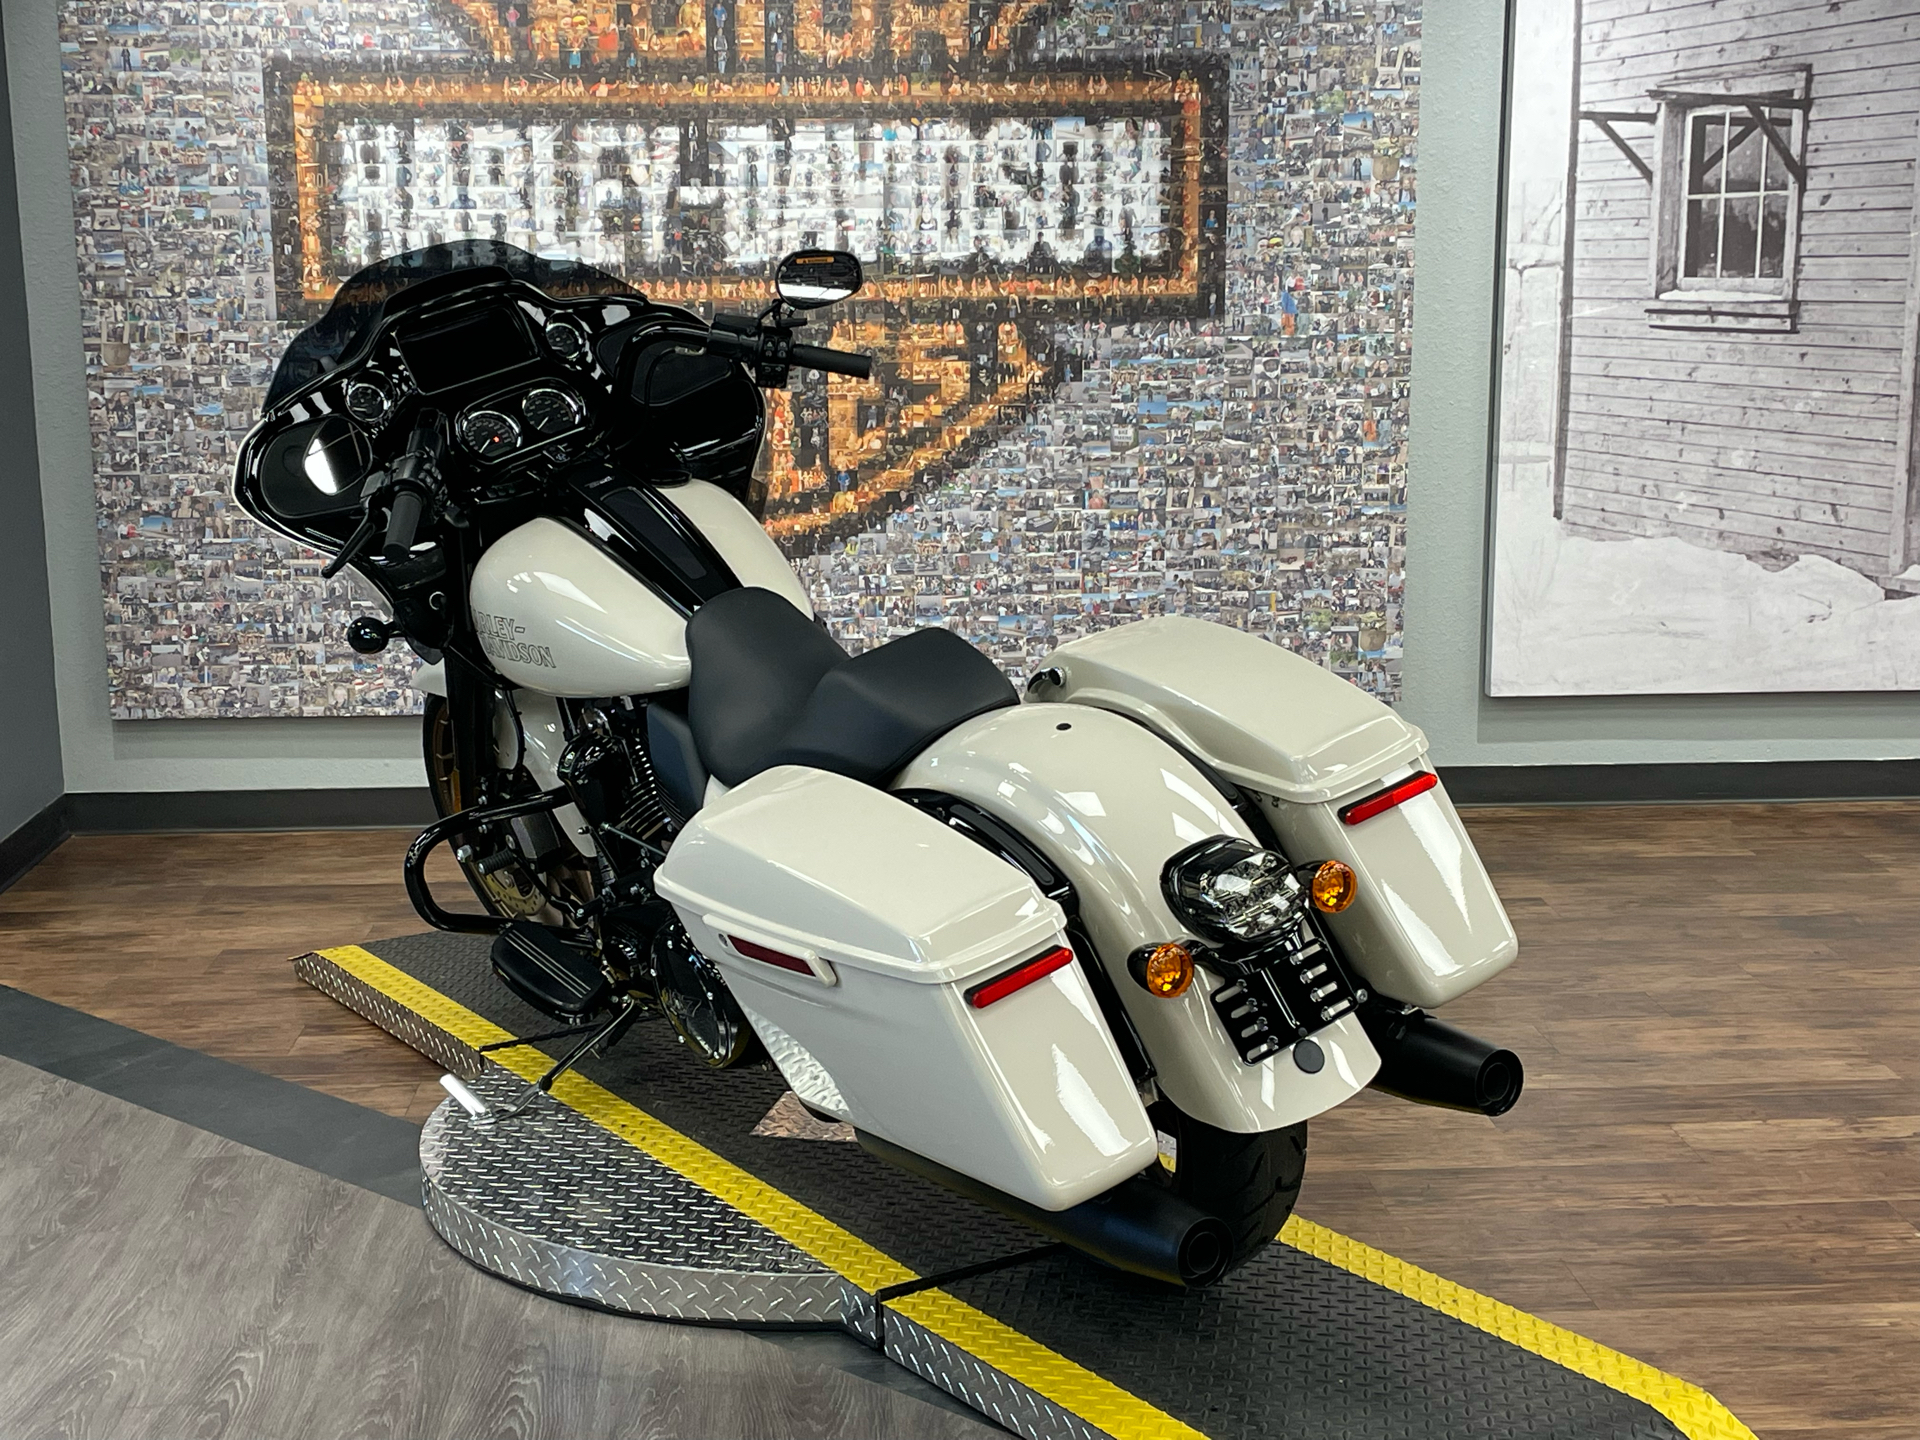 2023 Harley-Davidson Road Glide® ST in Greeley, Colorado - Photo 5